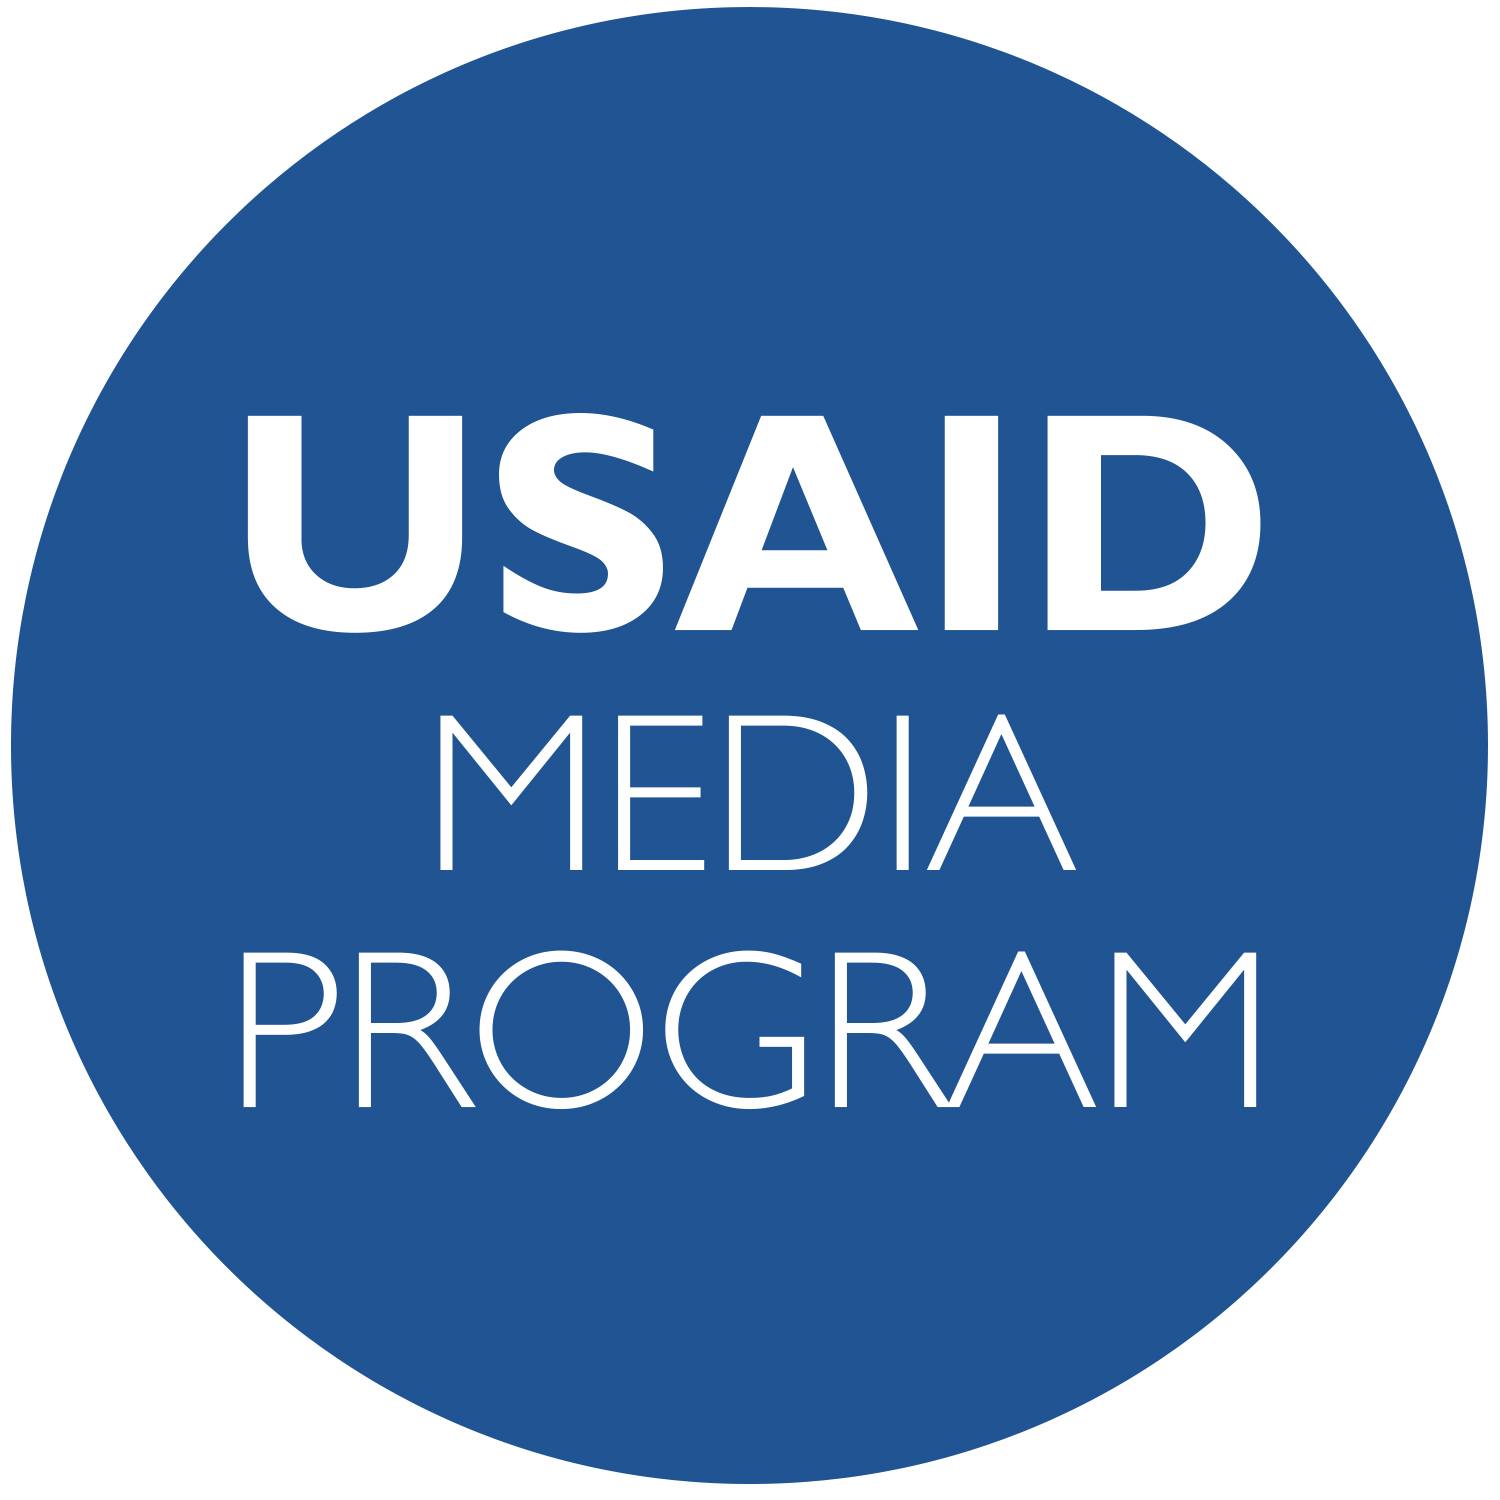  Media Program (USAID)